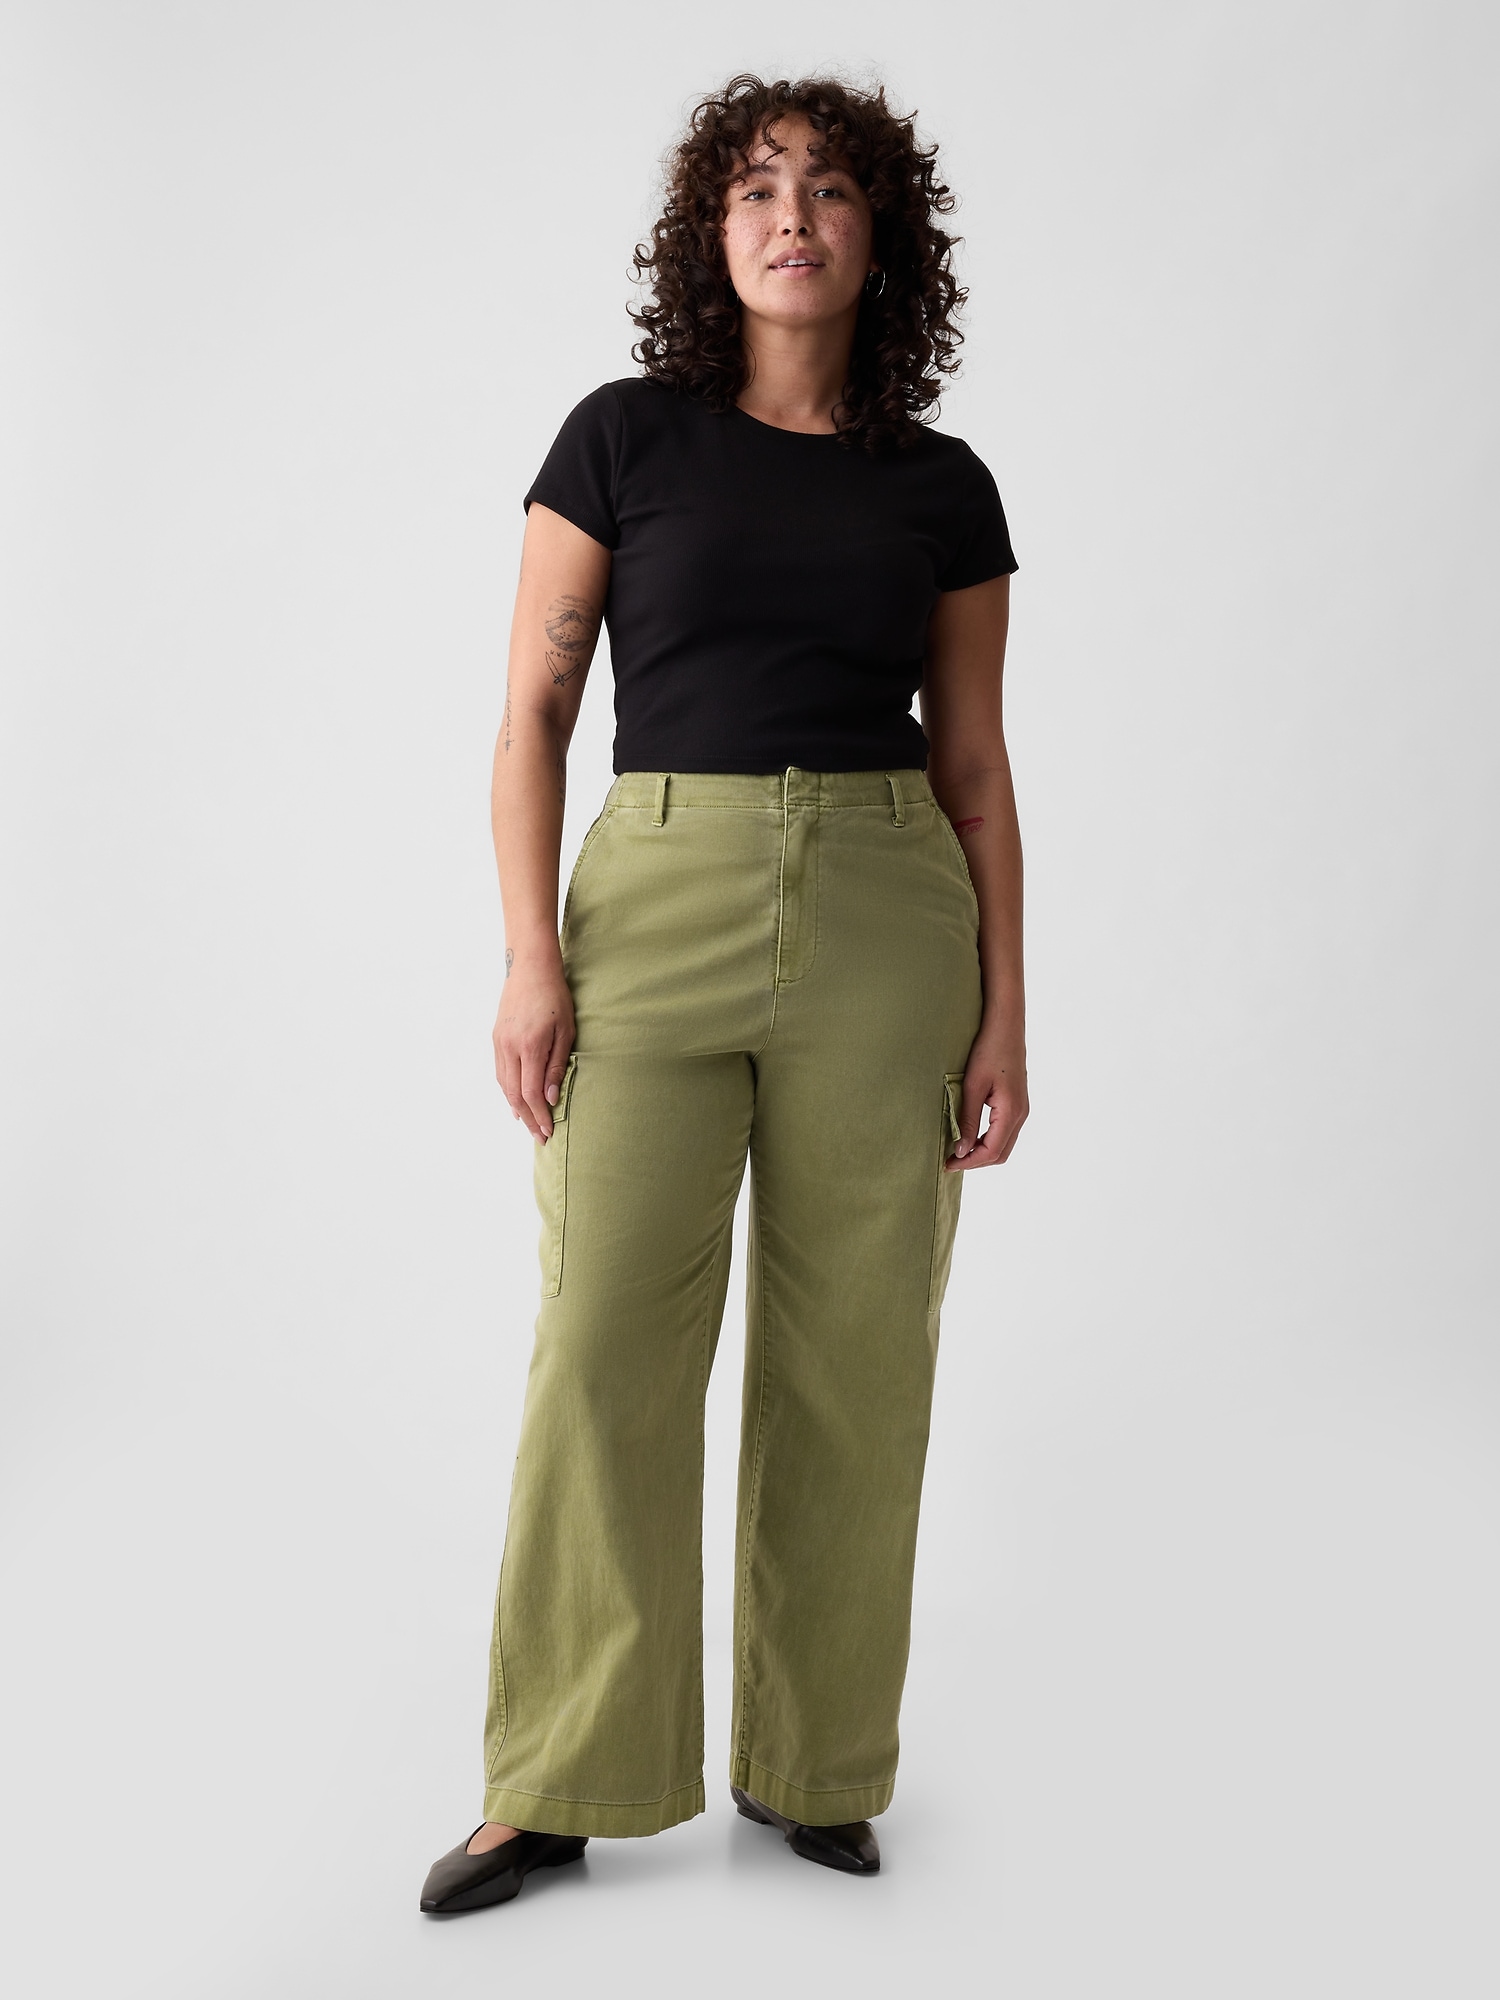 Fashion Women Casual Cargo Pants Khaki Solid Color High Waist